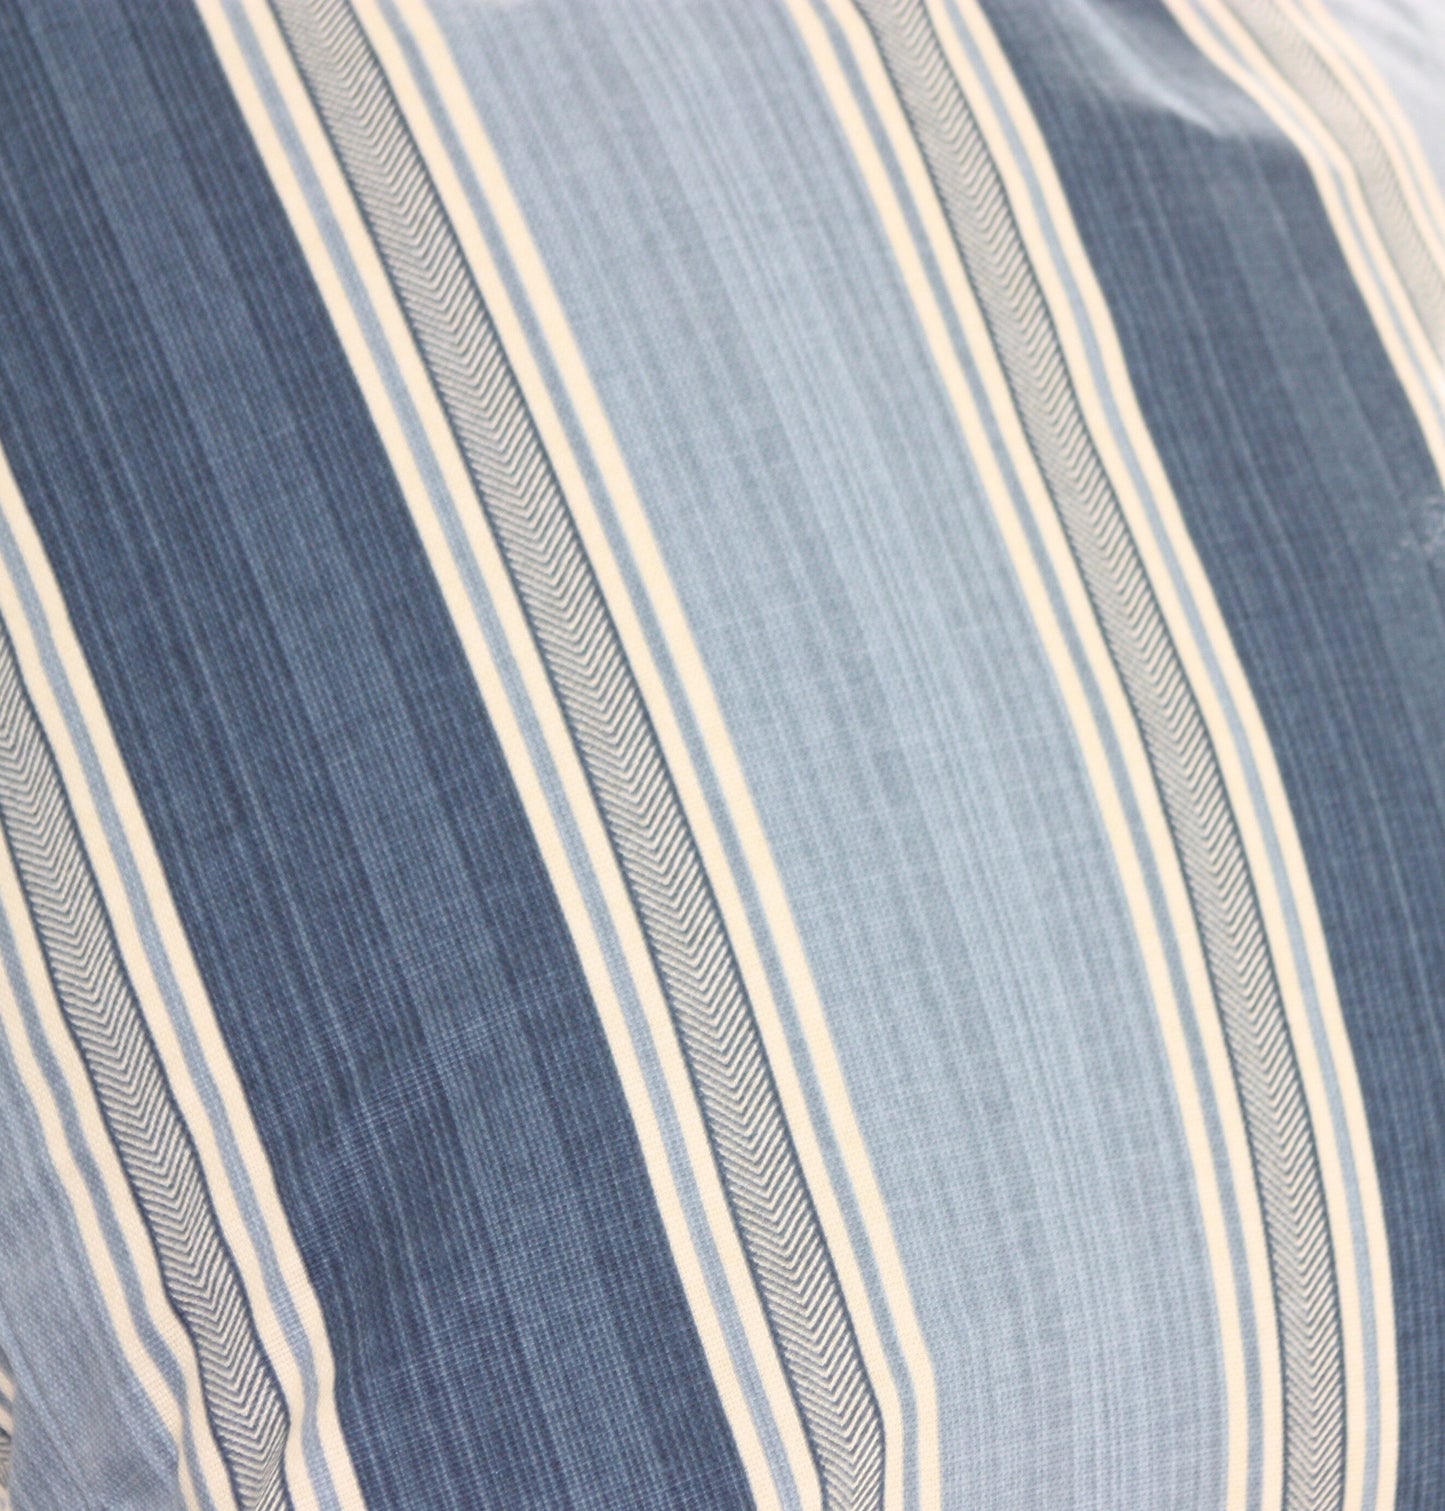 Waverly Williamsburg Striped cushion covers